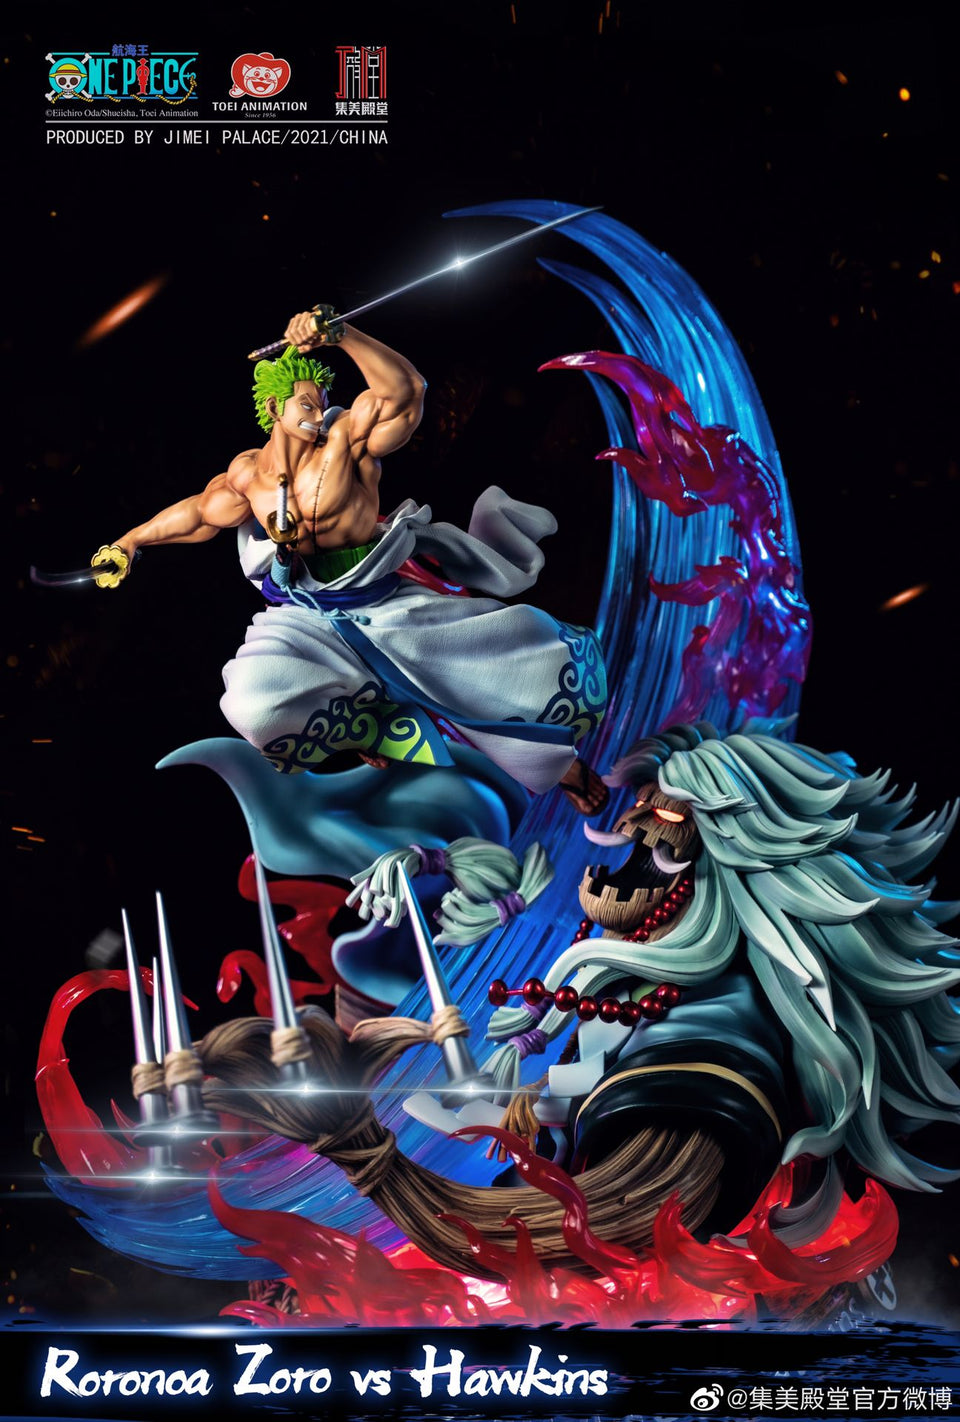 Jimei Palace Roronoa Zoro vs Hawkins (One Piece) 1/6 Scale Statue